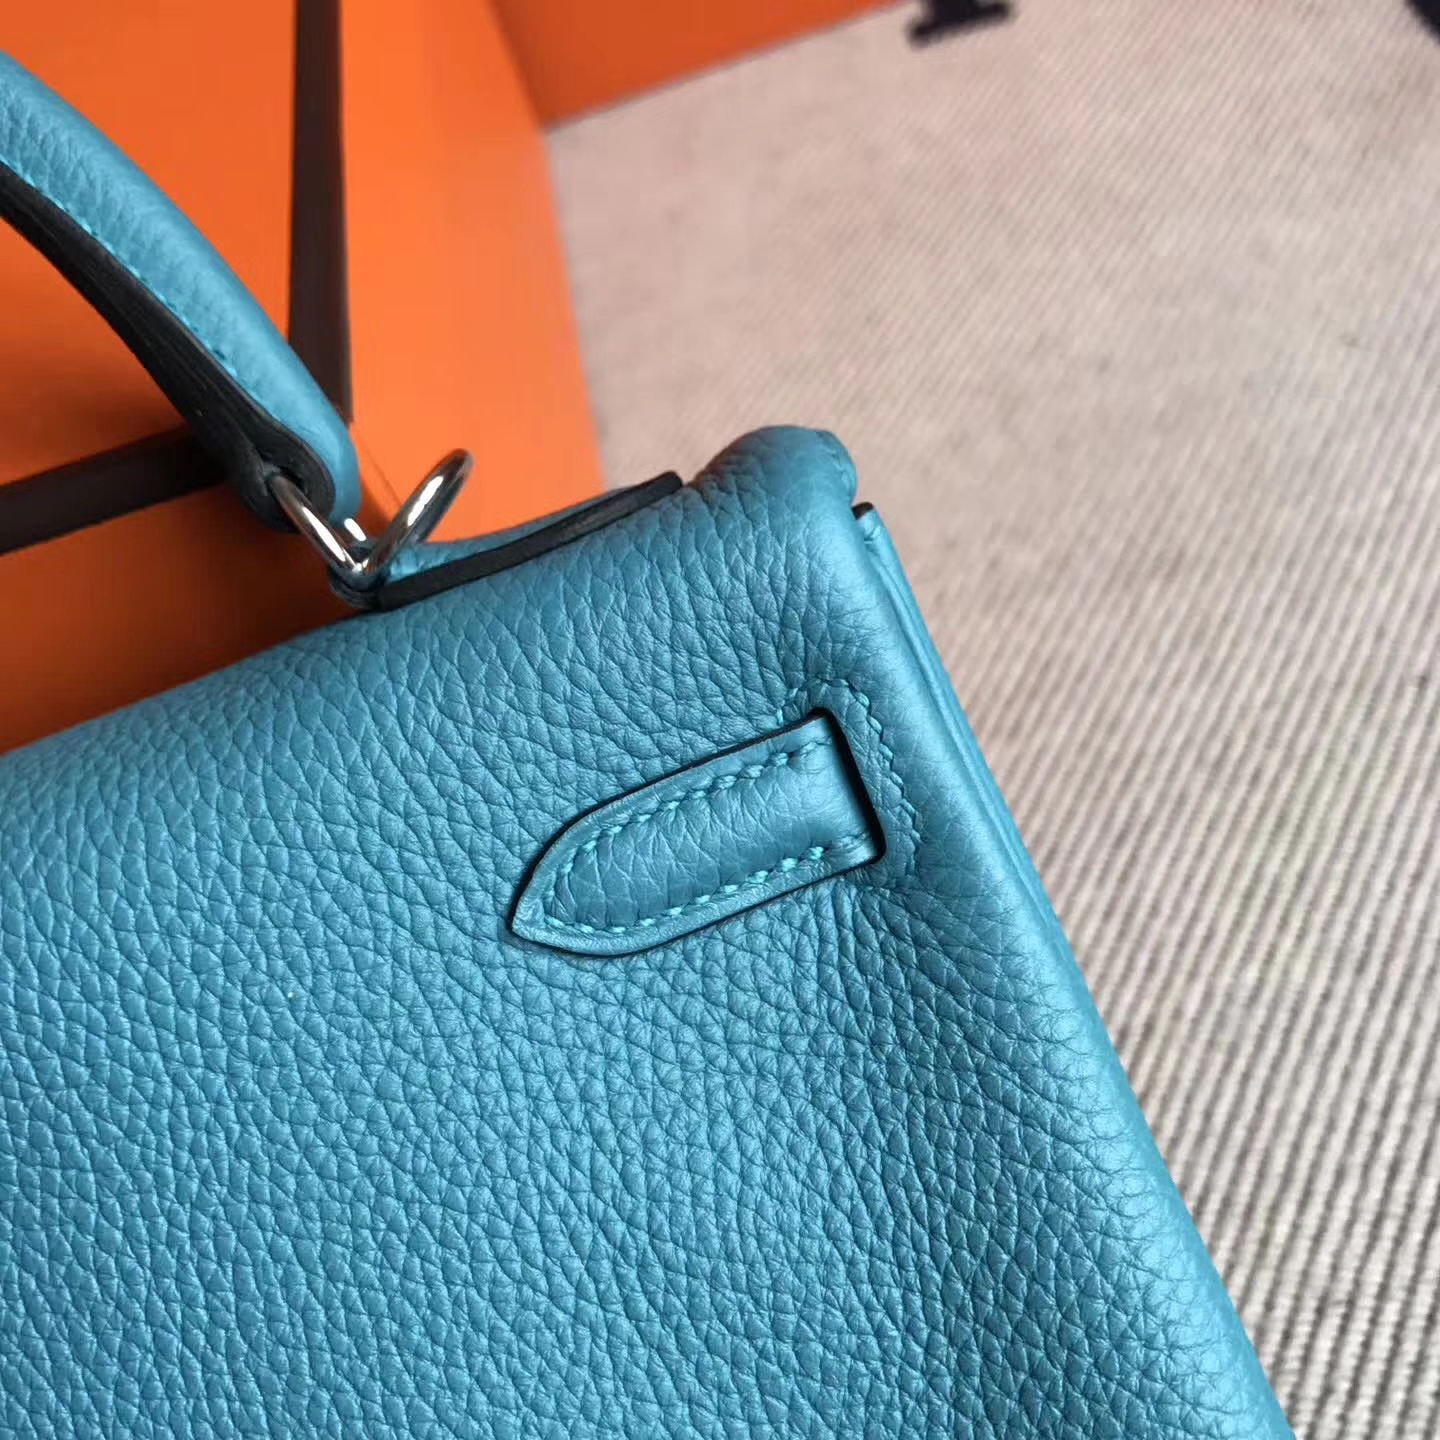 Luxury Hermes Togo Calfskin Kelly Bag 25cm in Blue Turquoise Silver Hardware